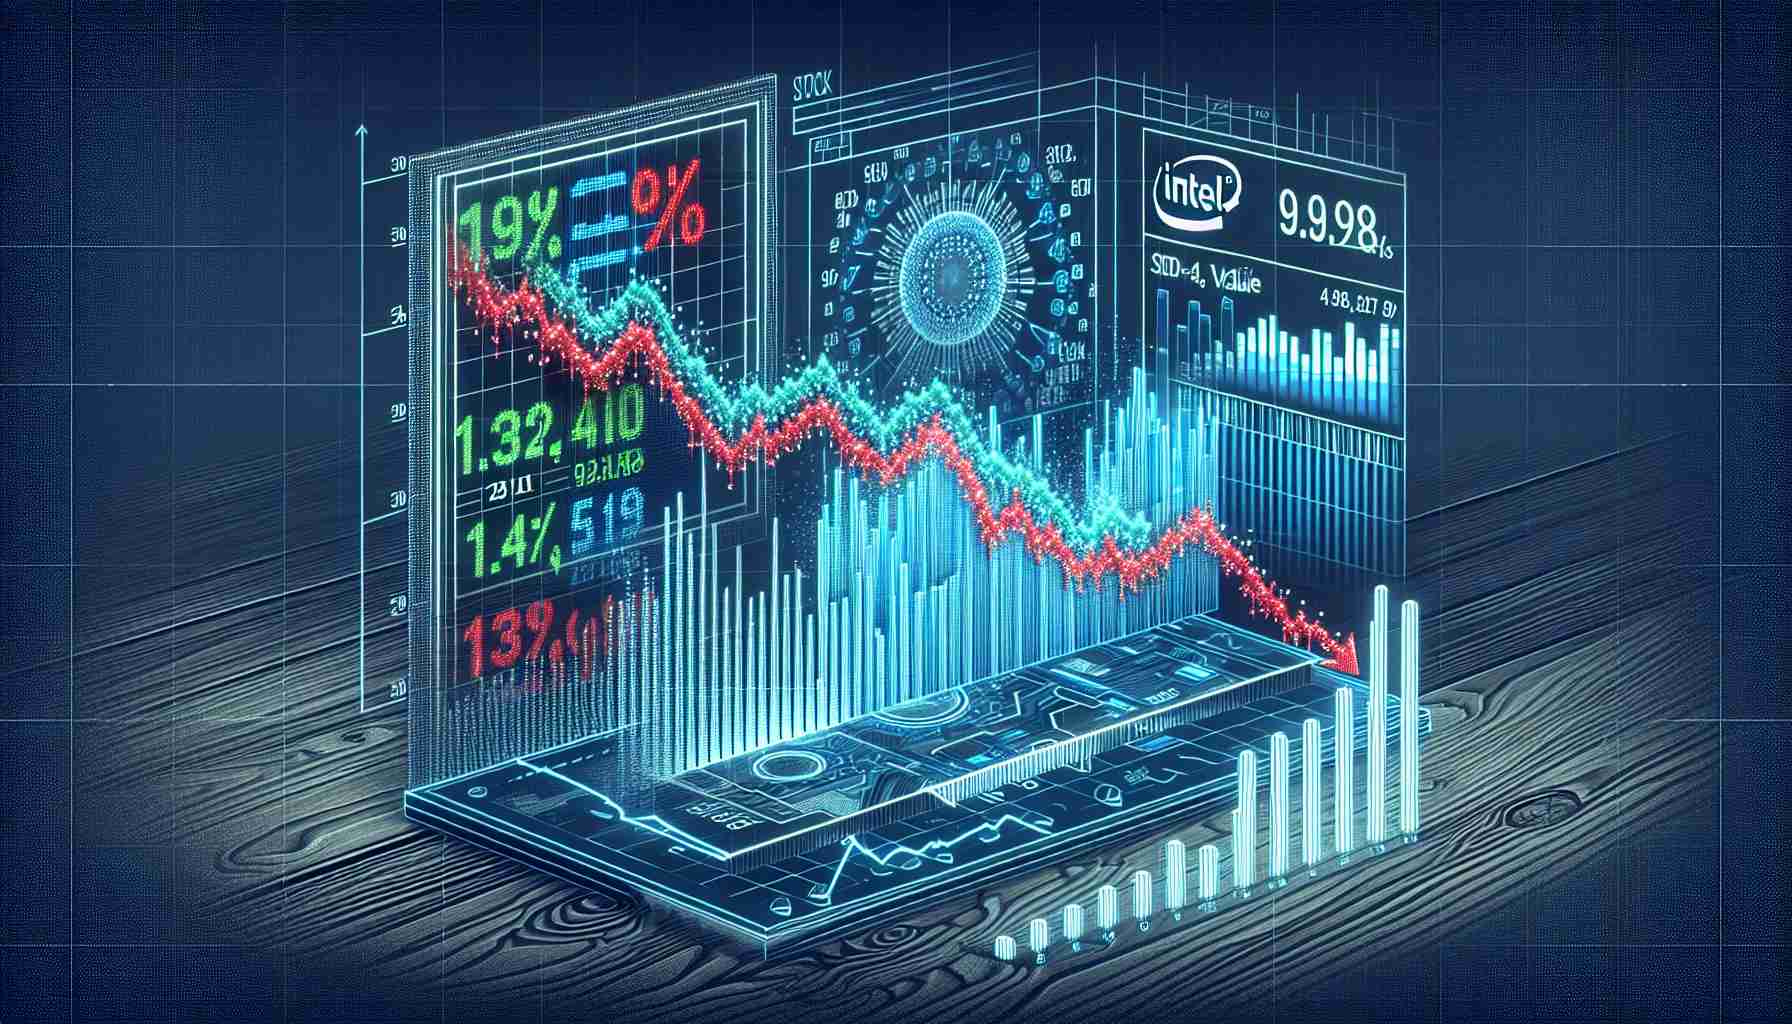 Intel Stock Dips Amid Shifting Tech Industry Dynamics